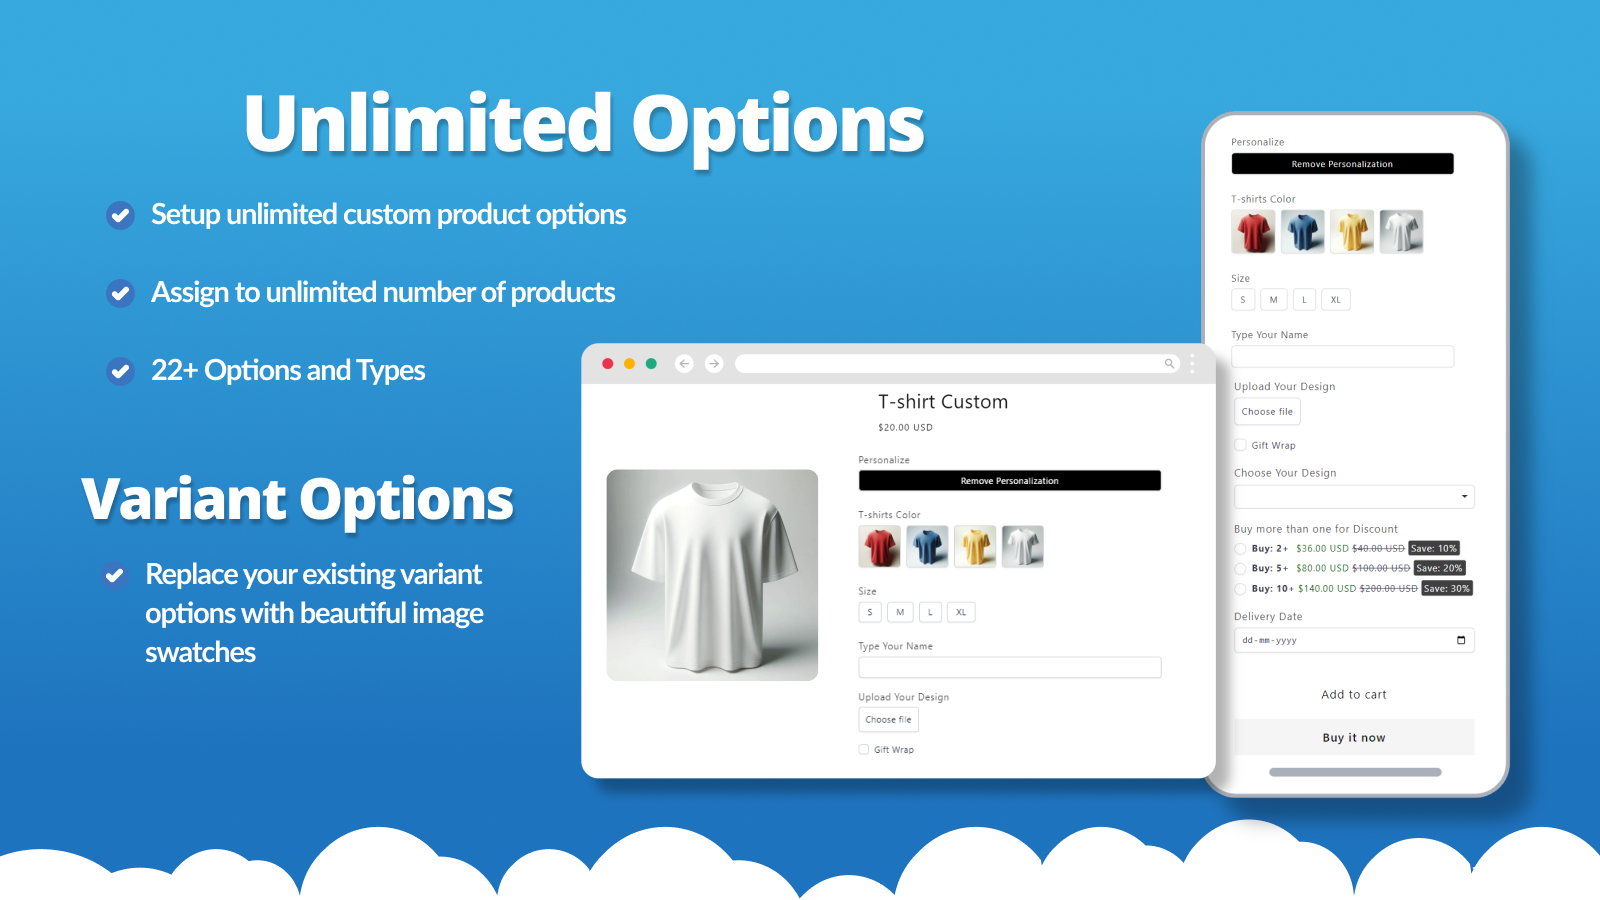 Simple setup of unlimited custom product options 